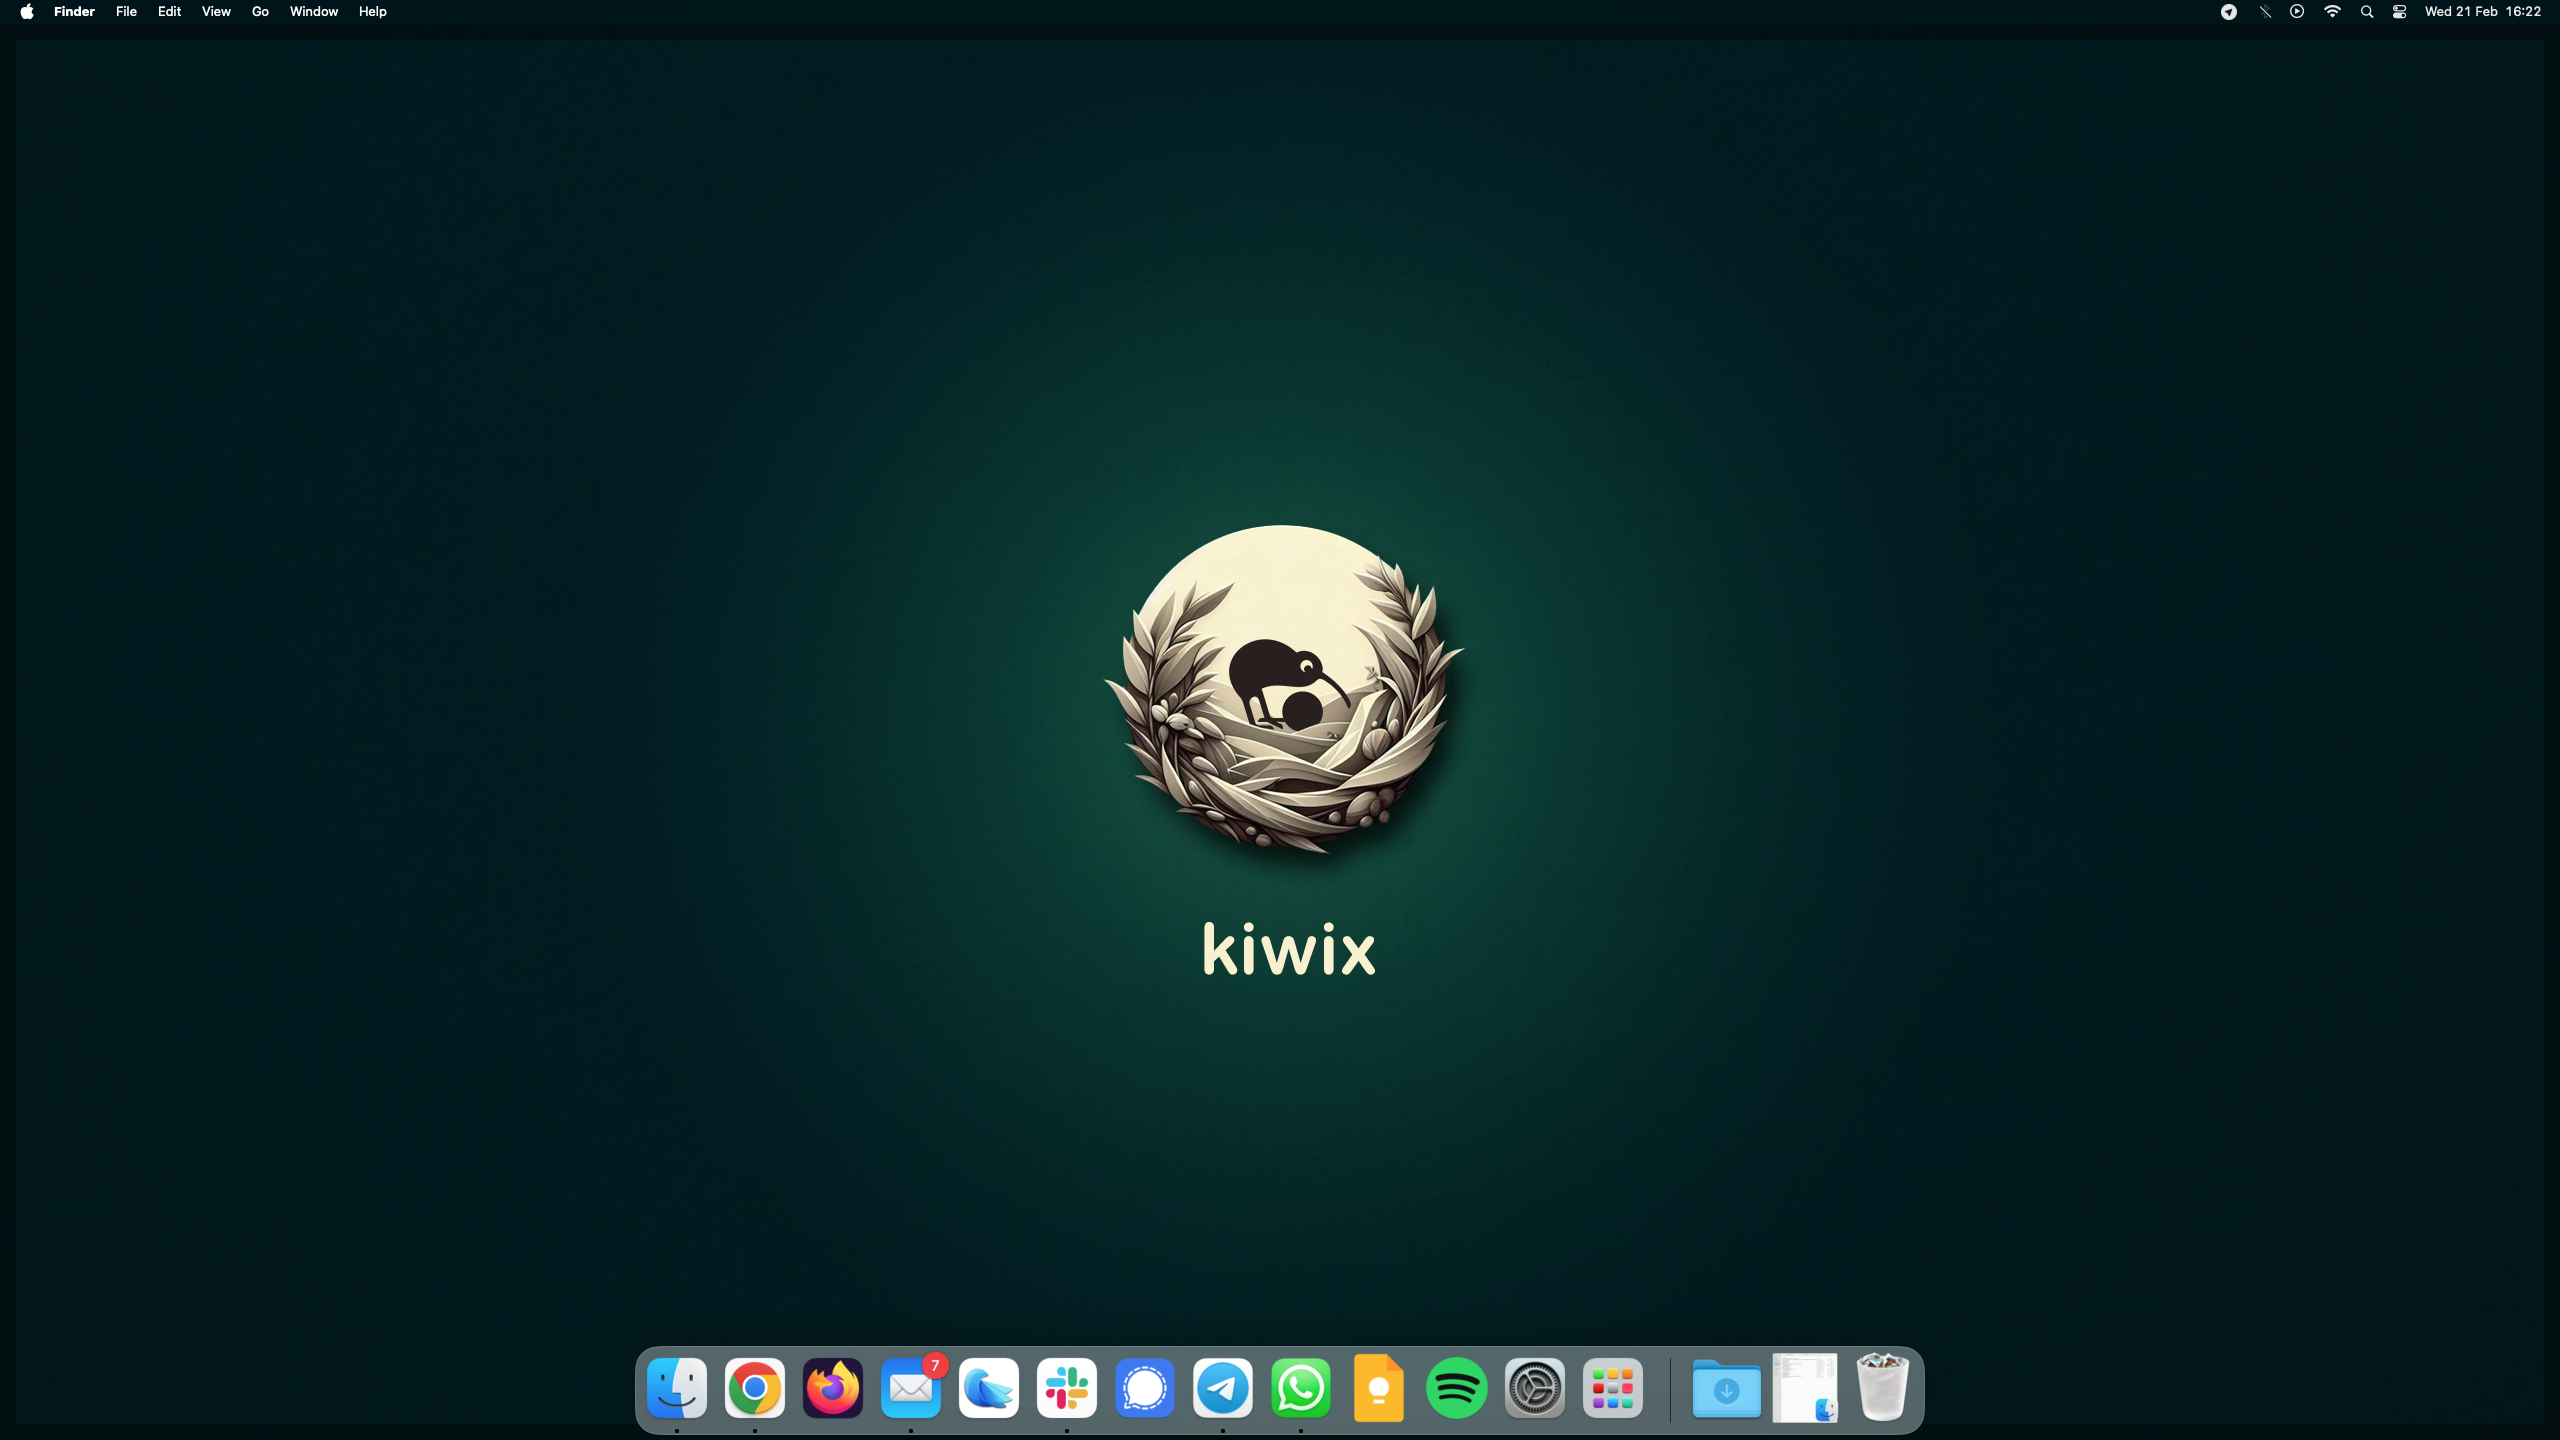 Kiwix desktop background on macOS